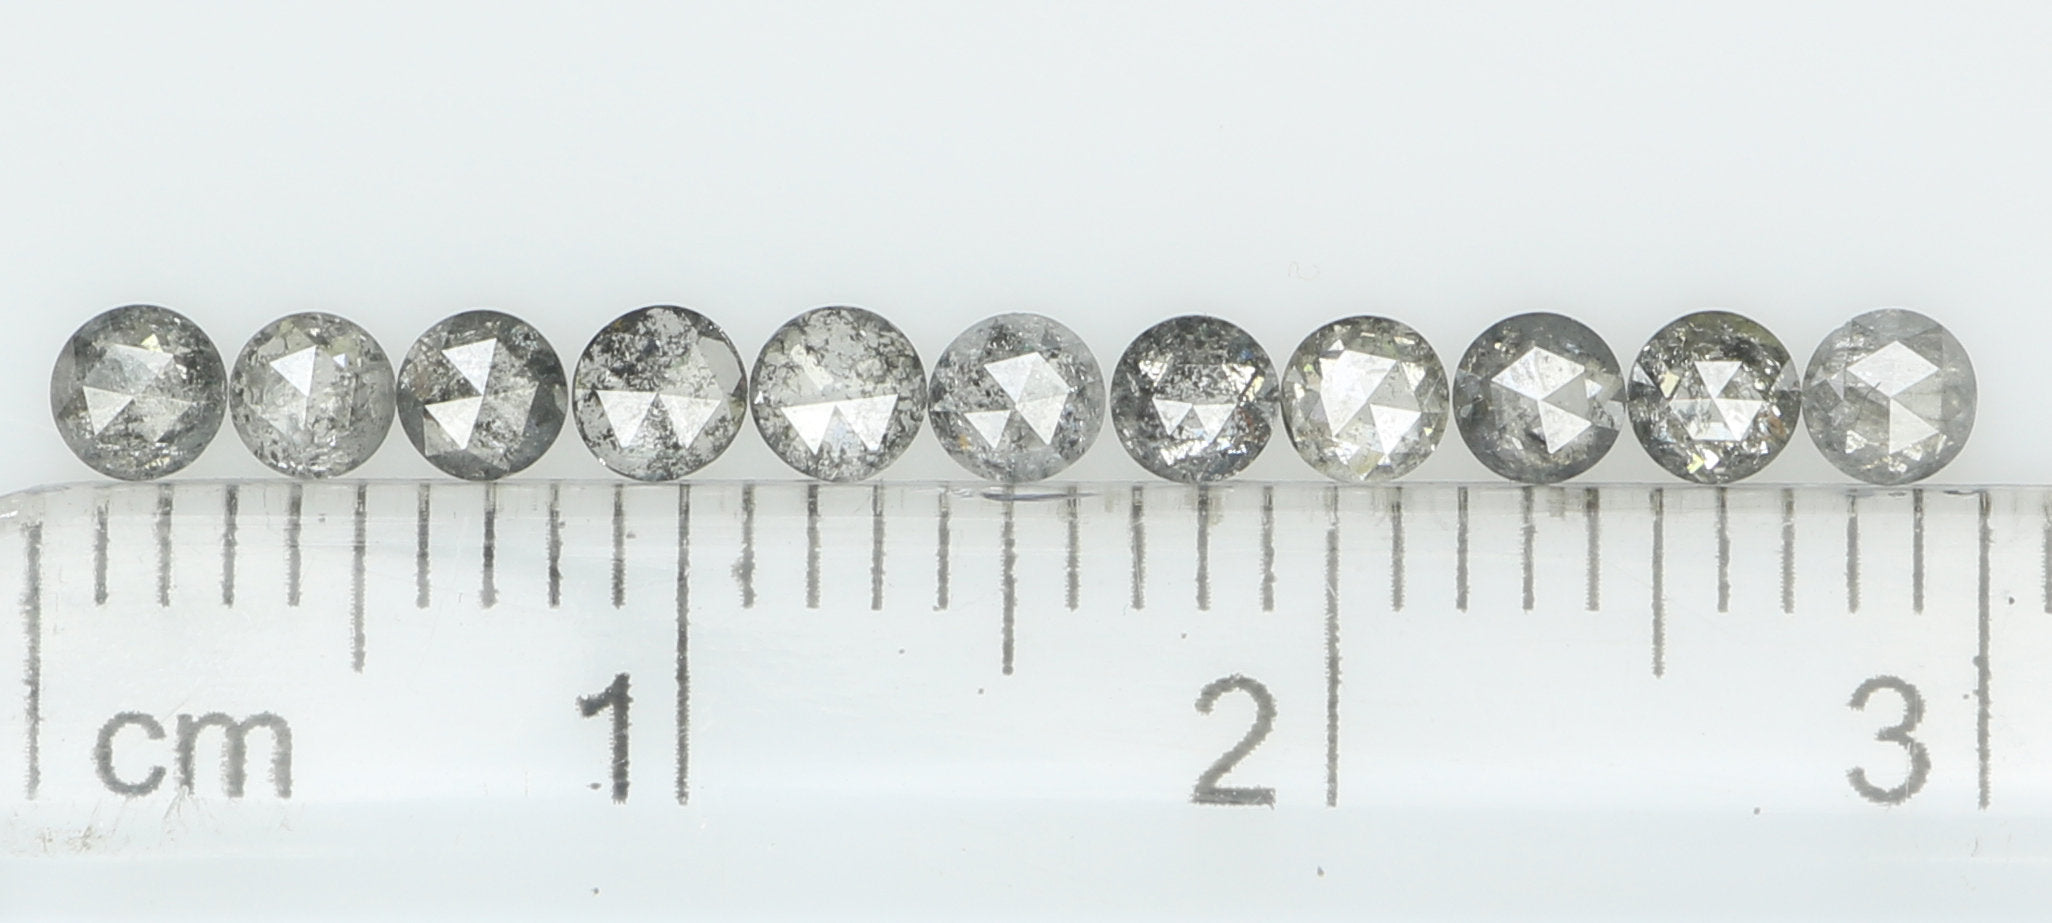 Natural Loose Diamond Round Rose Cut Black Grey Color I3 Clarity 11 Pcs 0.89 Ct KDK1153